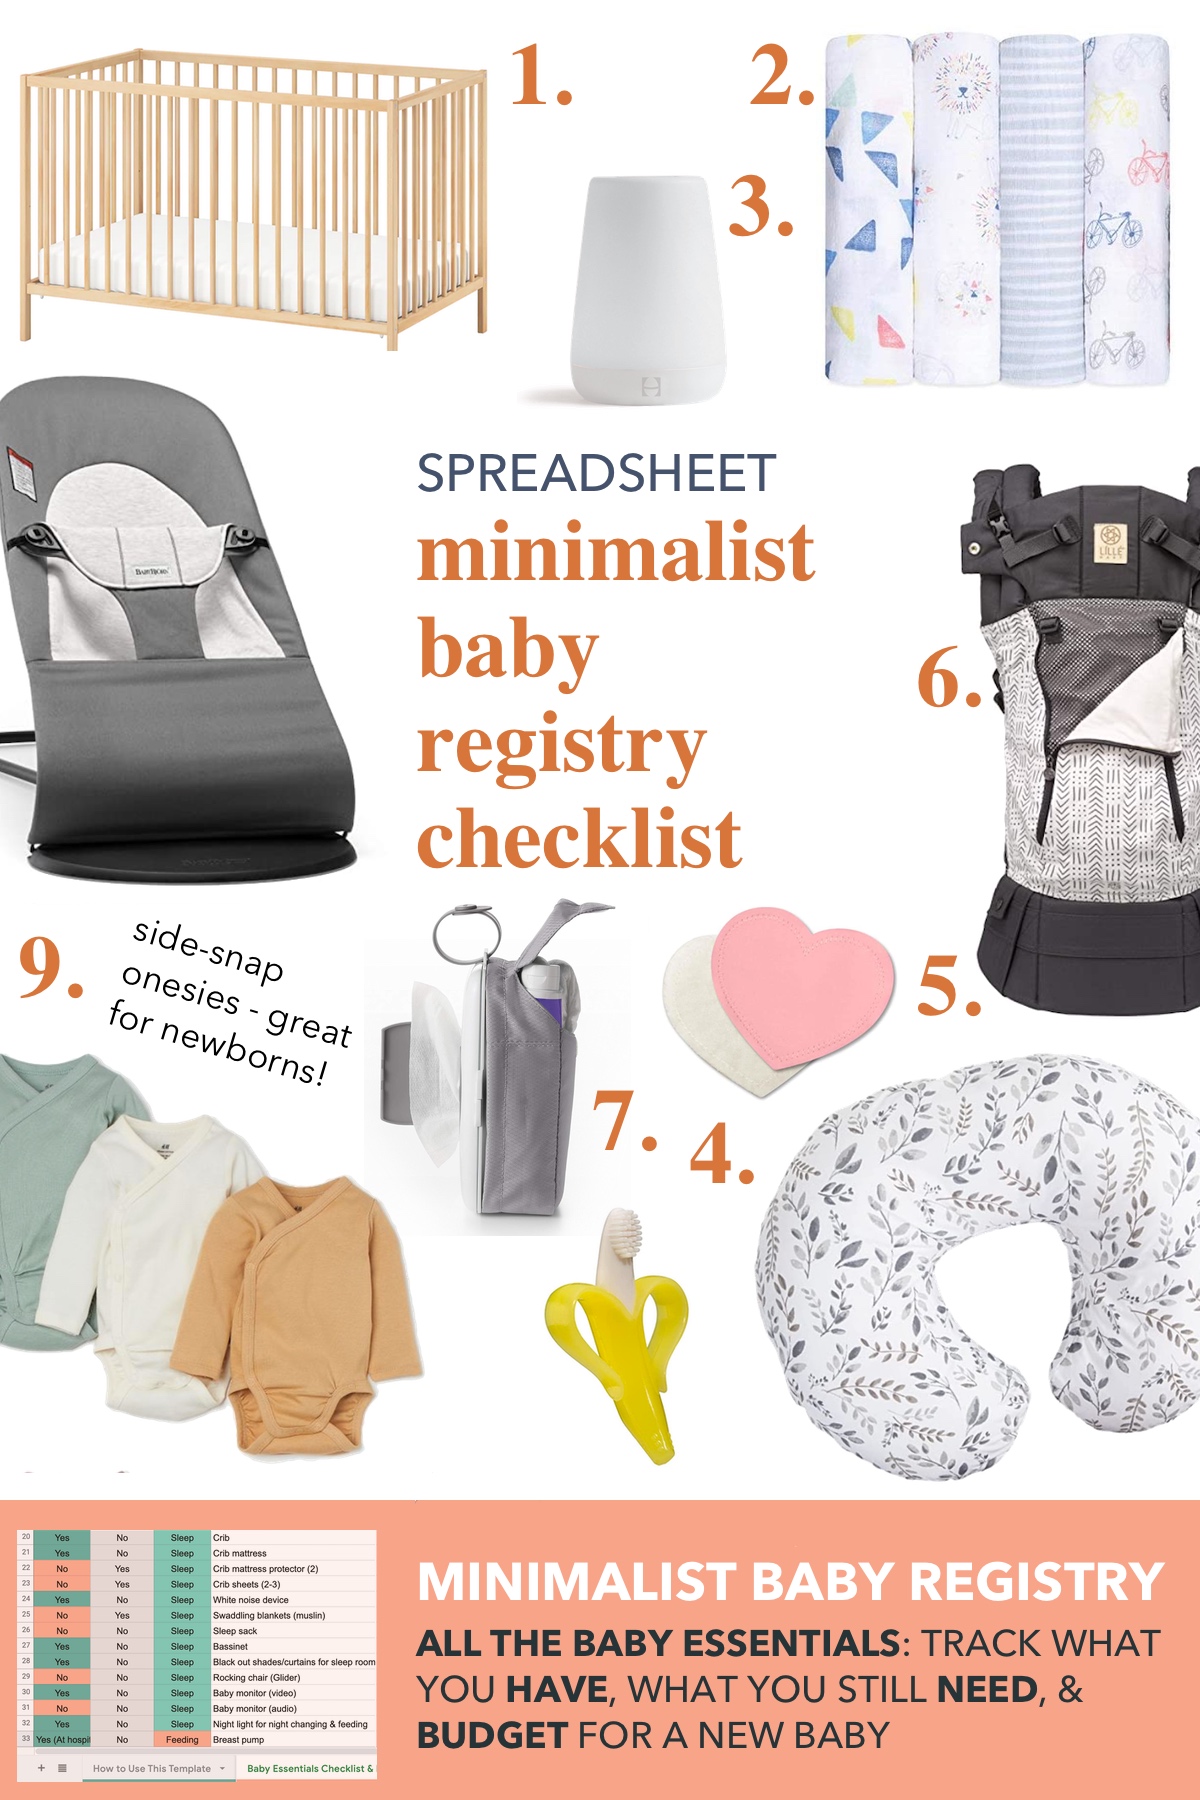 https://frugal-bonvivant.com/wp-content/uploads/2021/10/minimalist-baby-registry-checklist.jpg